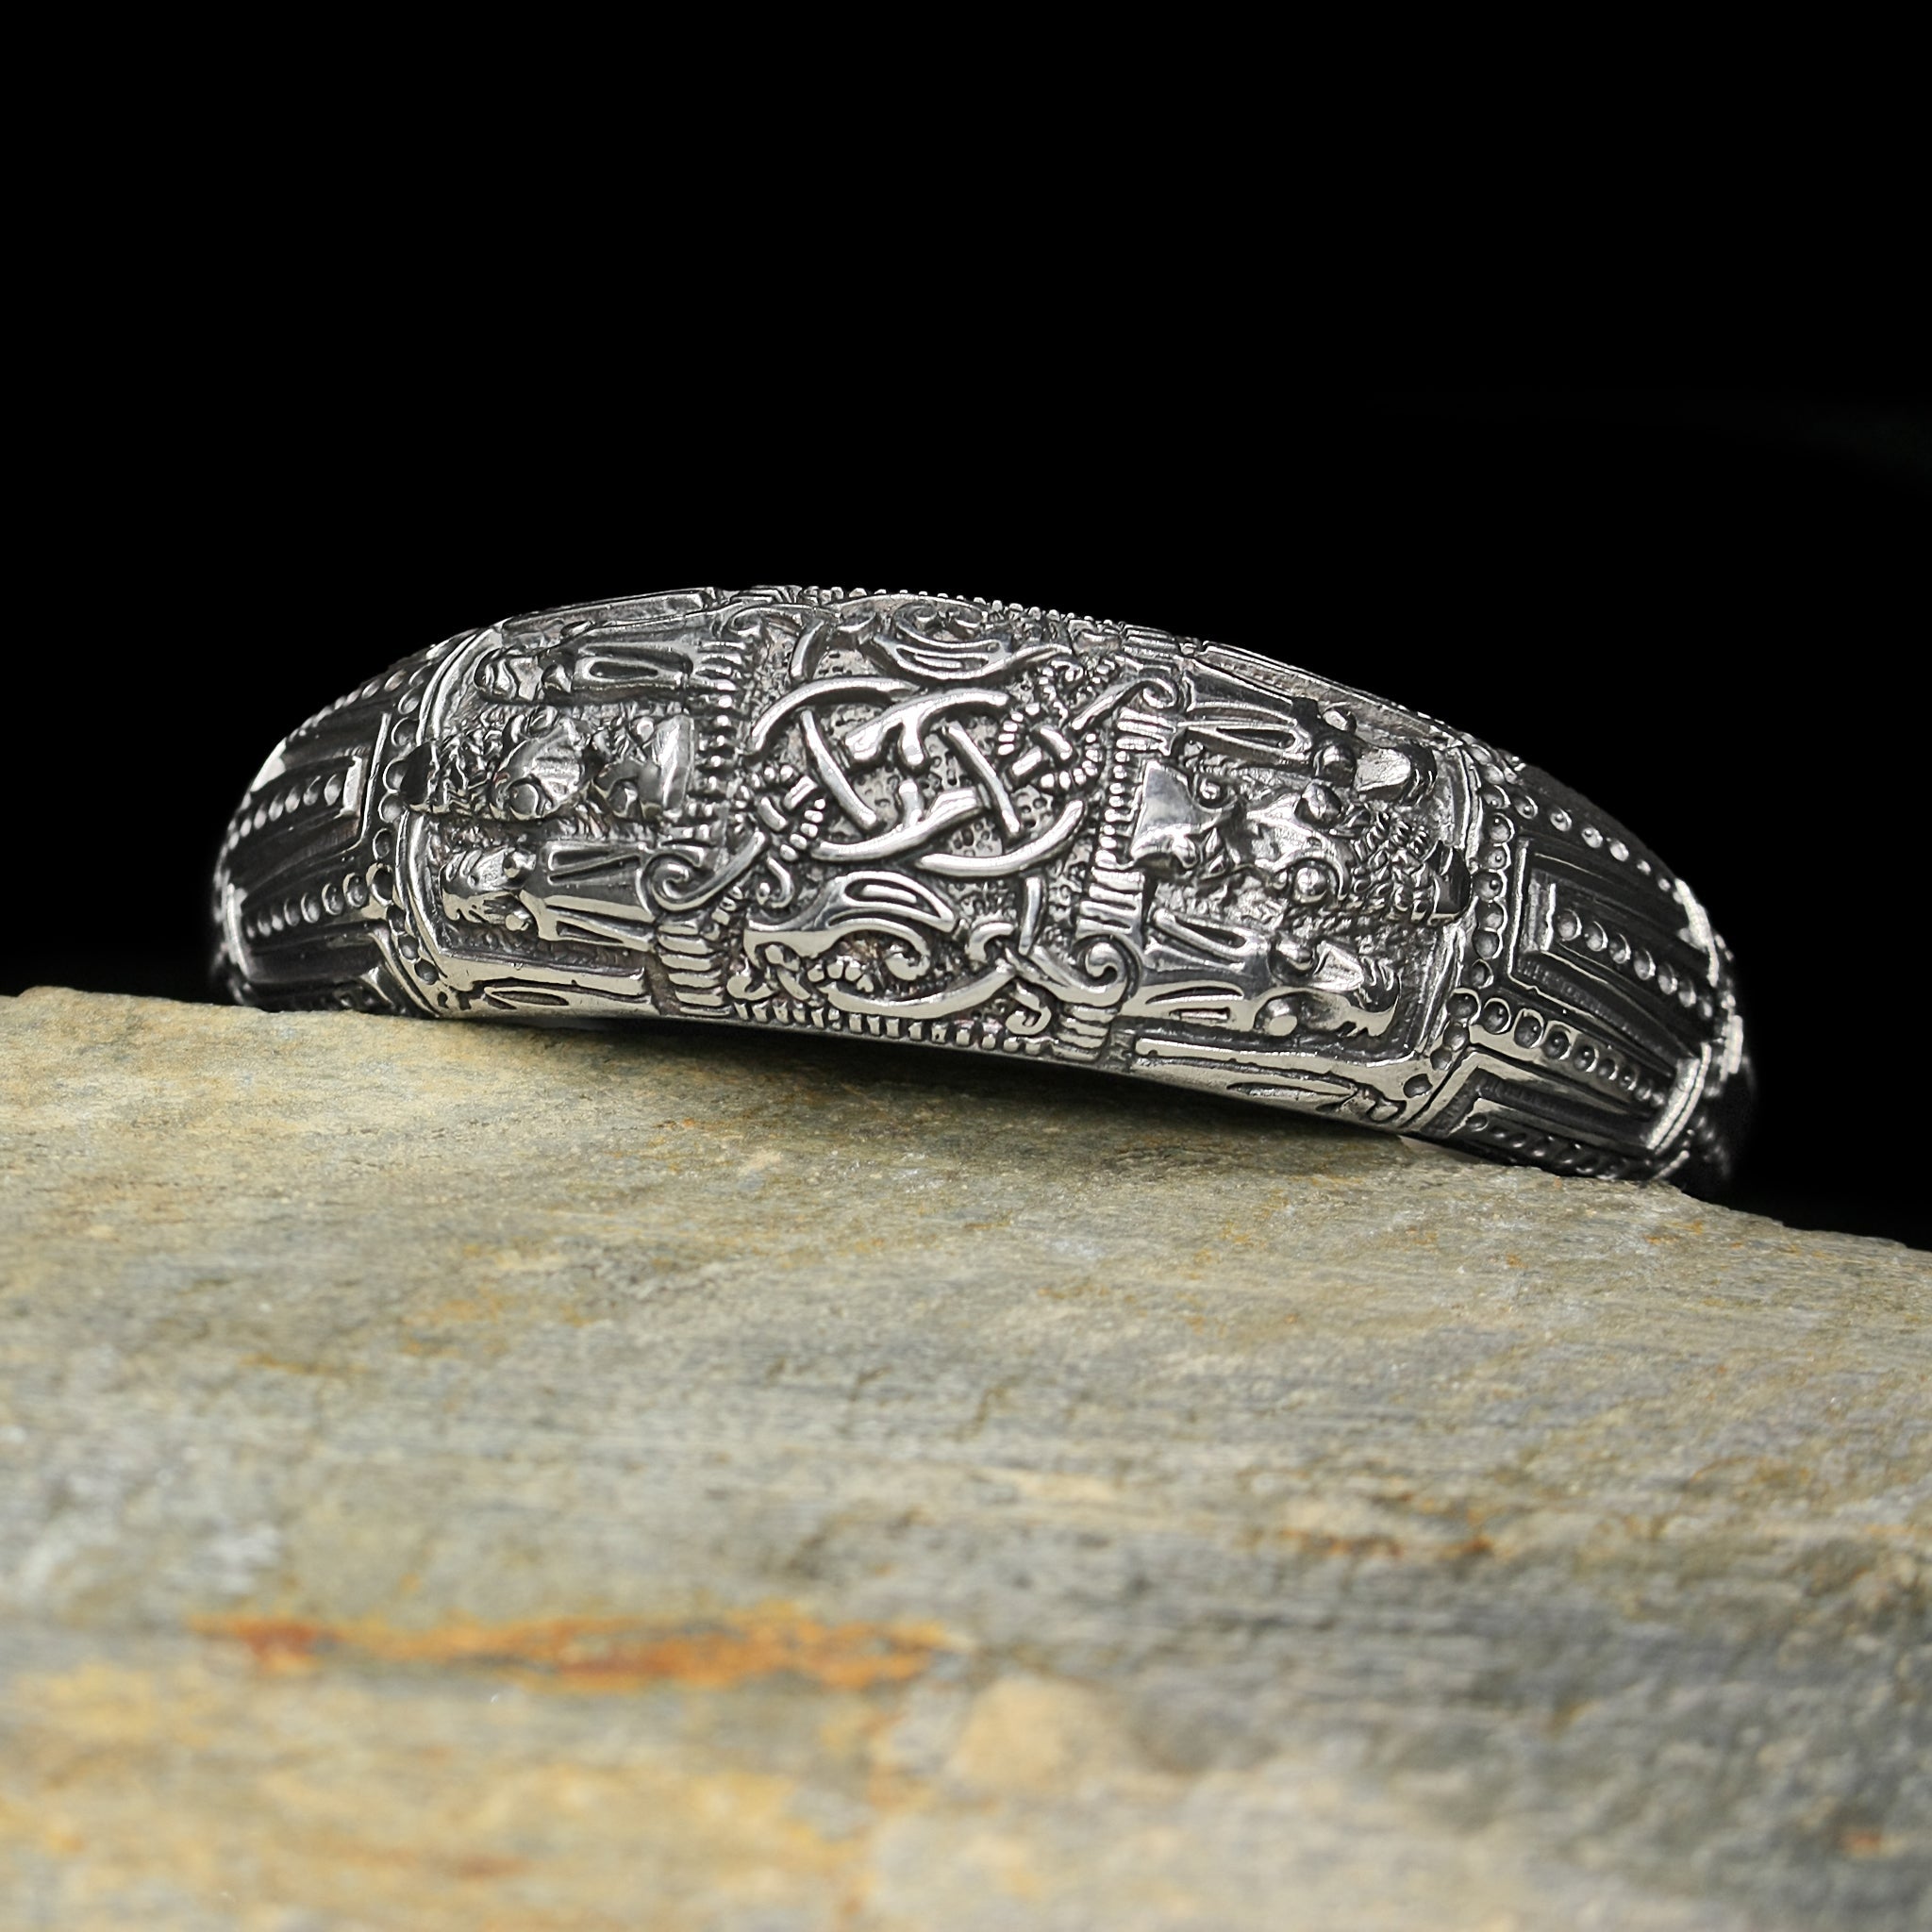 Silver Viking Arm Ring from Novgorod on Rock